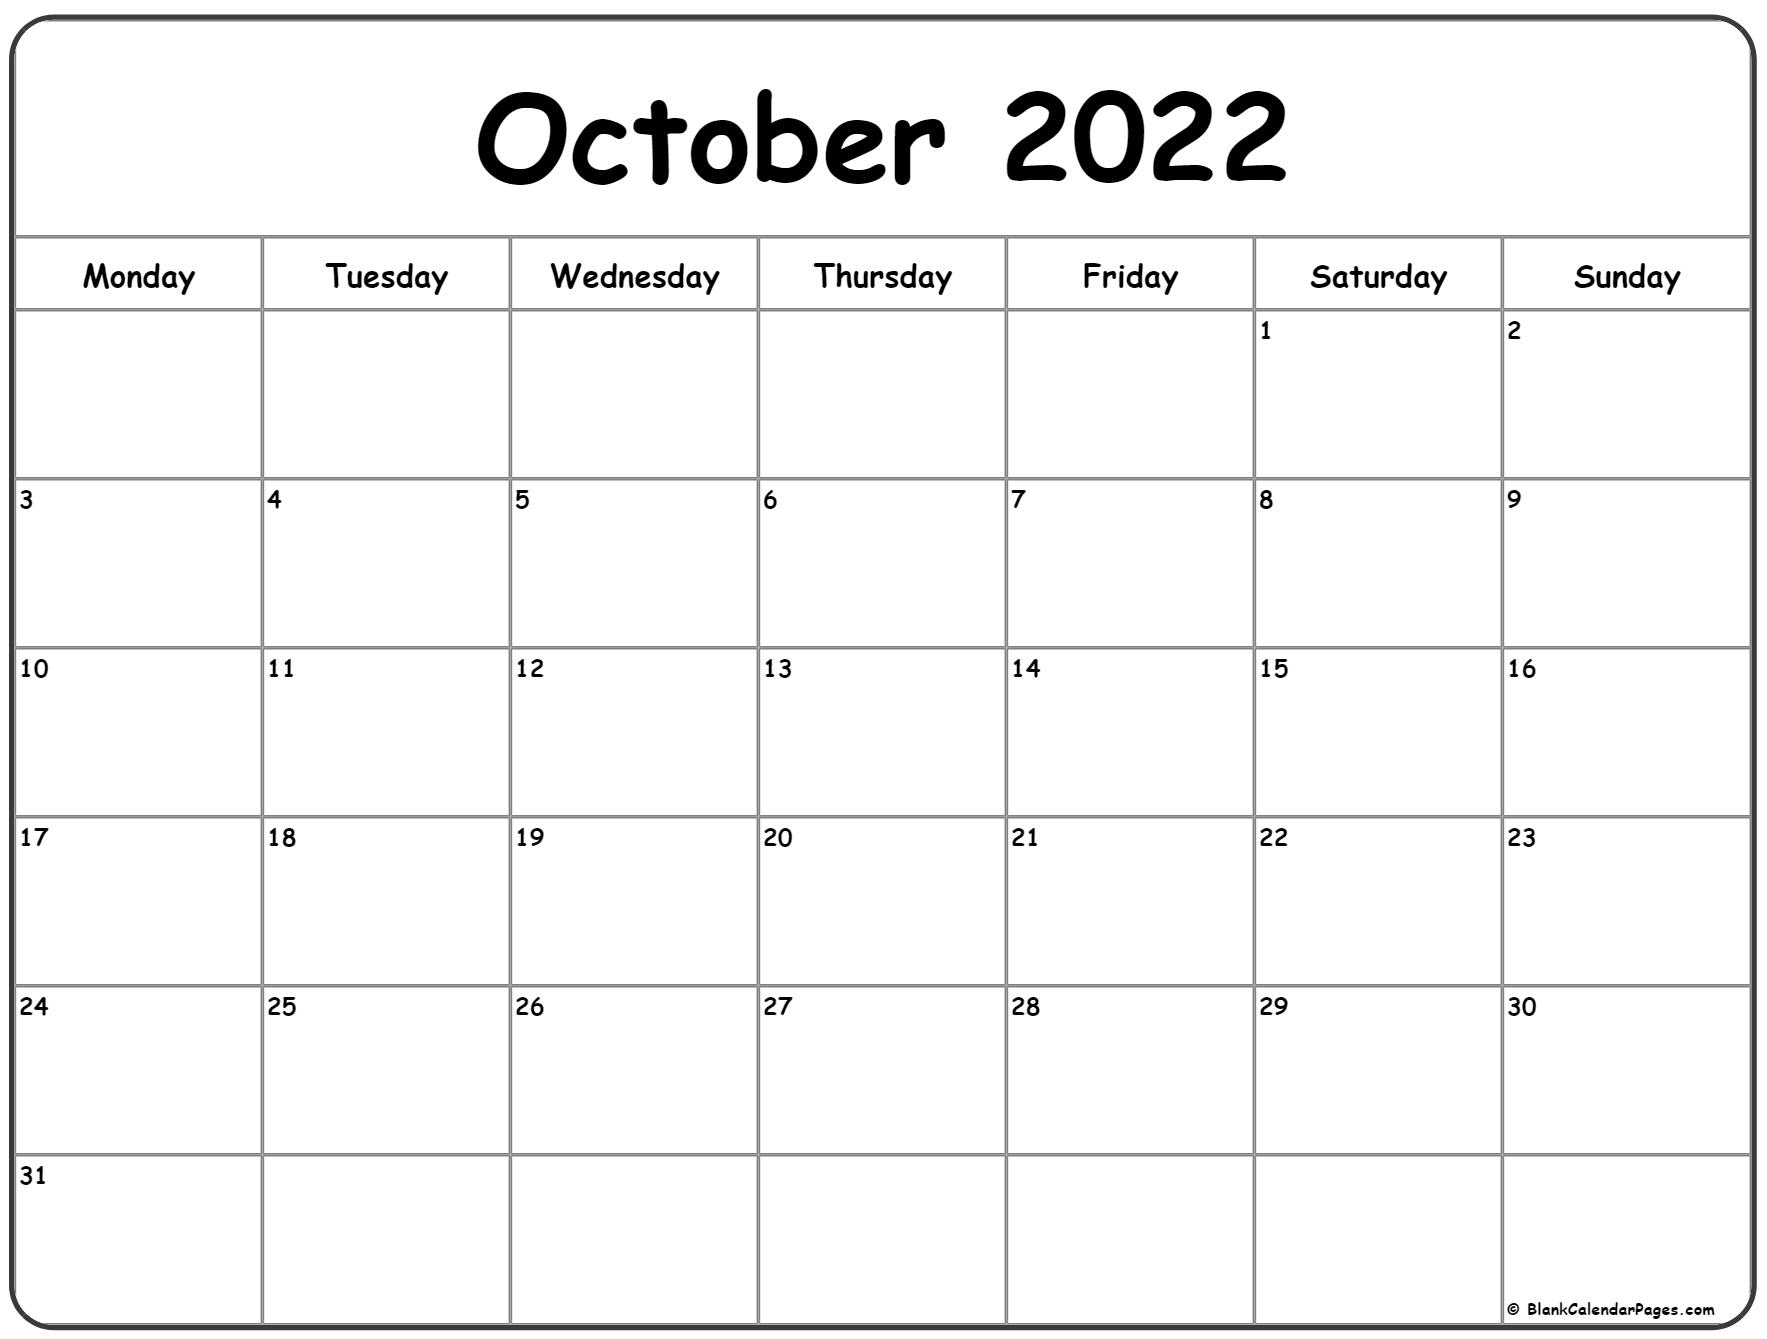 October 2022 Monday Calendar | Monday To Sunday